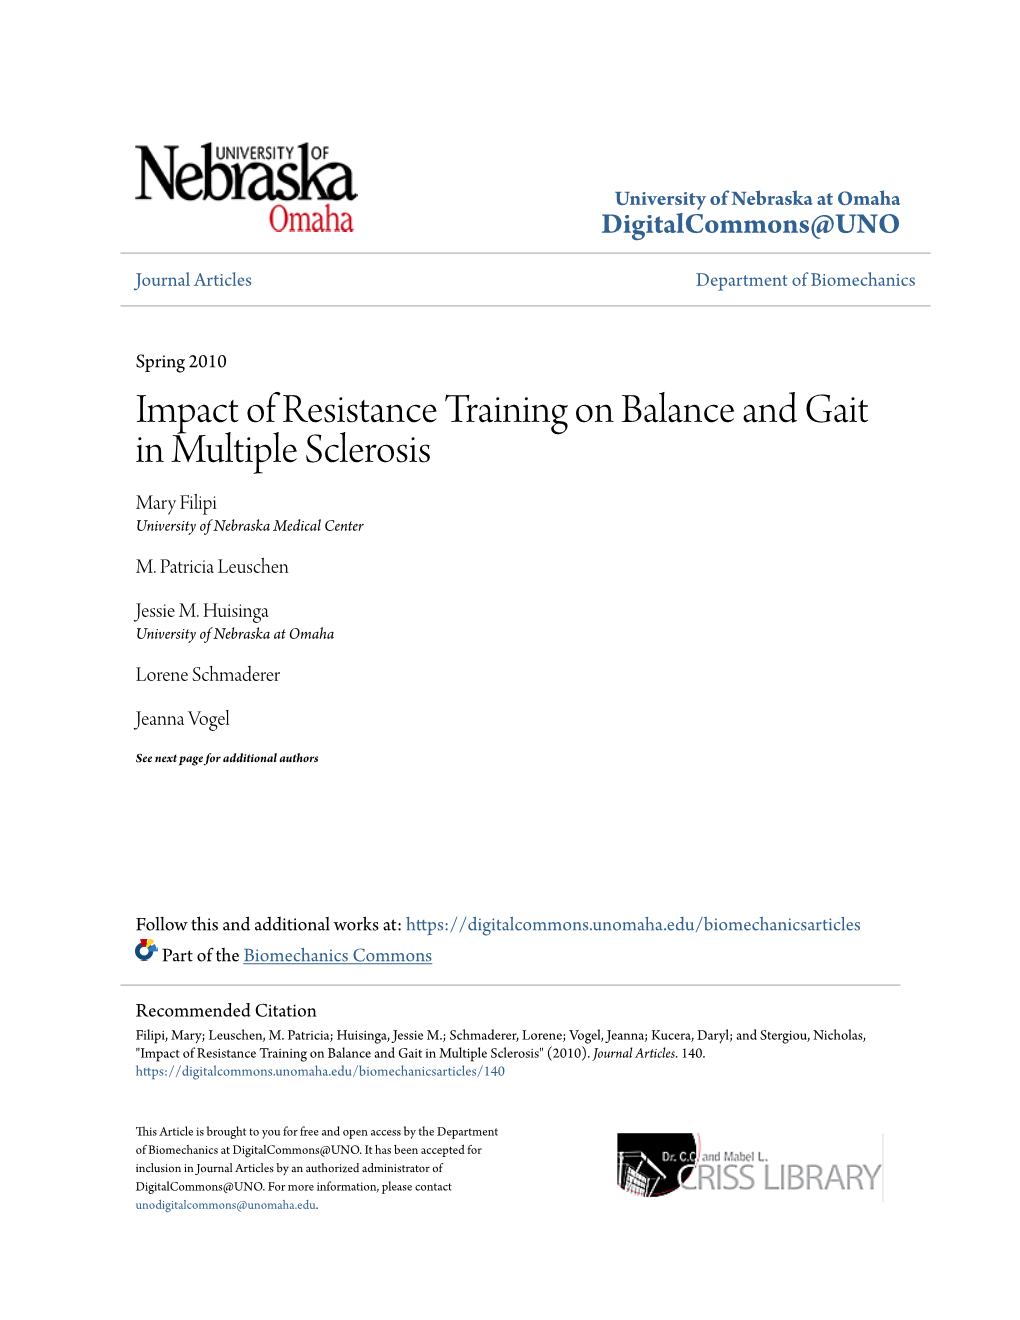 Impact of Resistance Training on Balance and Gait in Multiple Sclerosis Mary Filipi University of Nebraska Medical Center